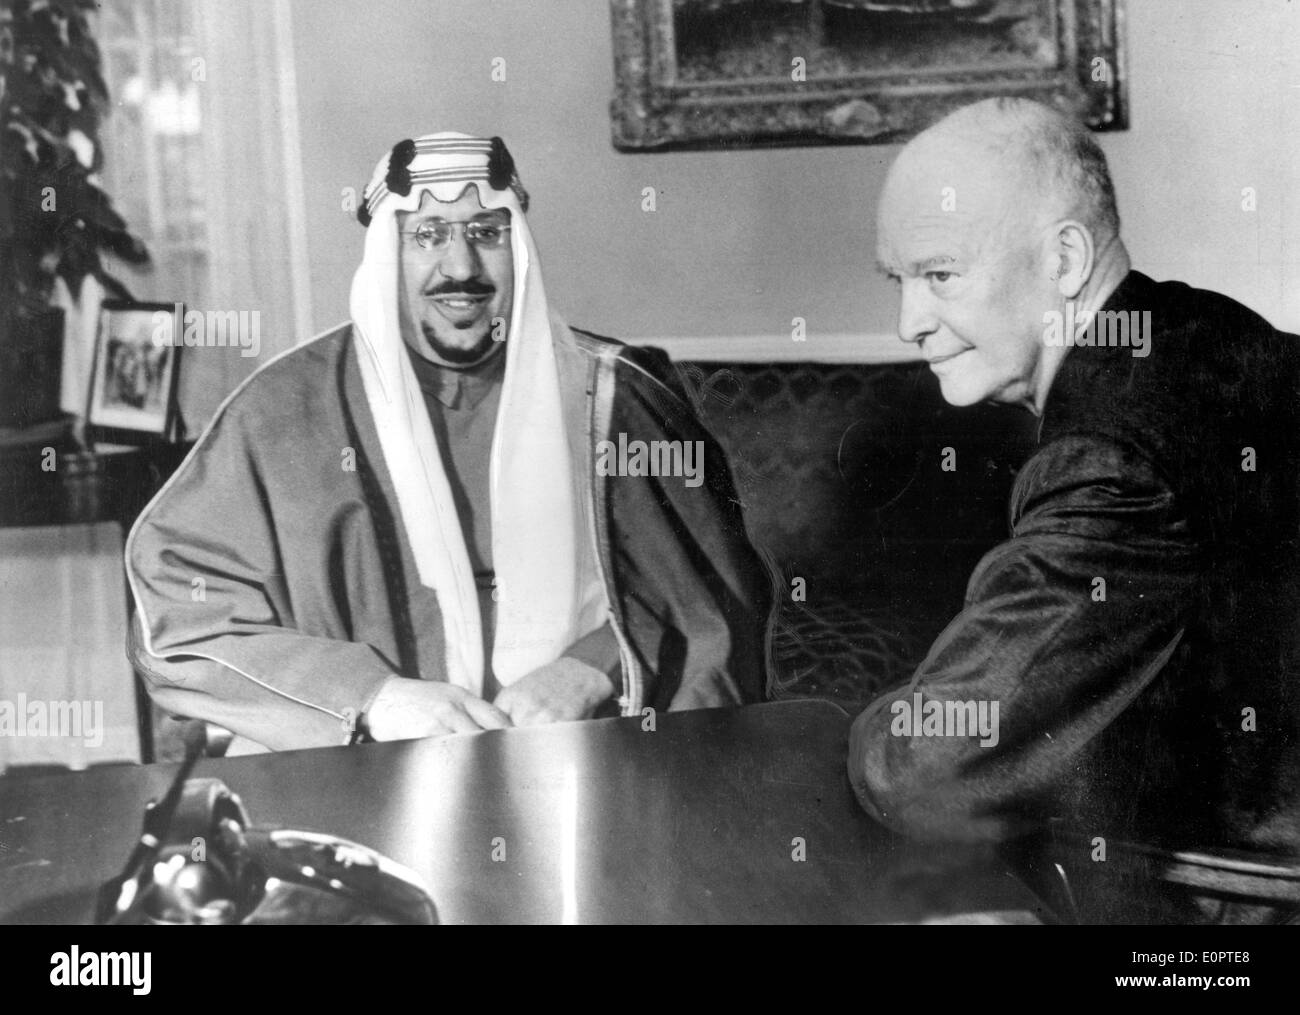 king-ibn-saud-visits-with-president-eisenhower-E0PTE8.jpg